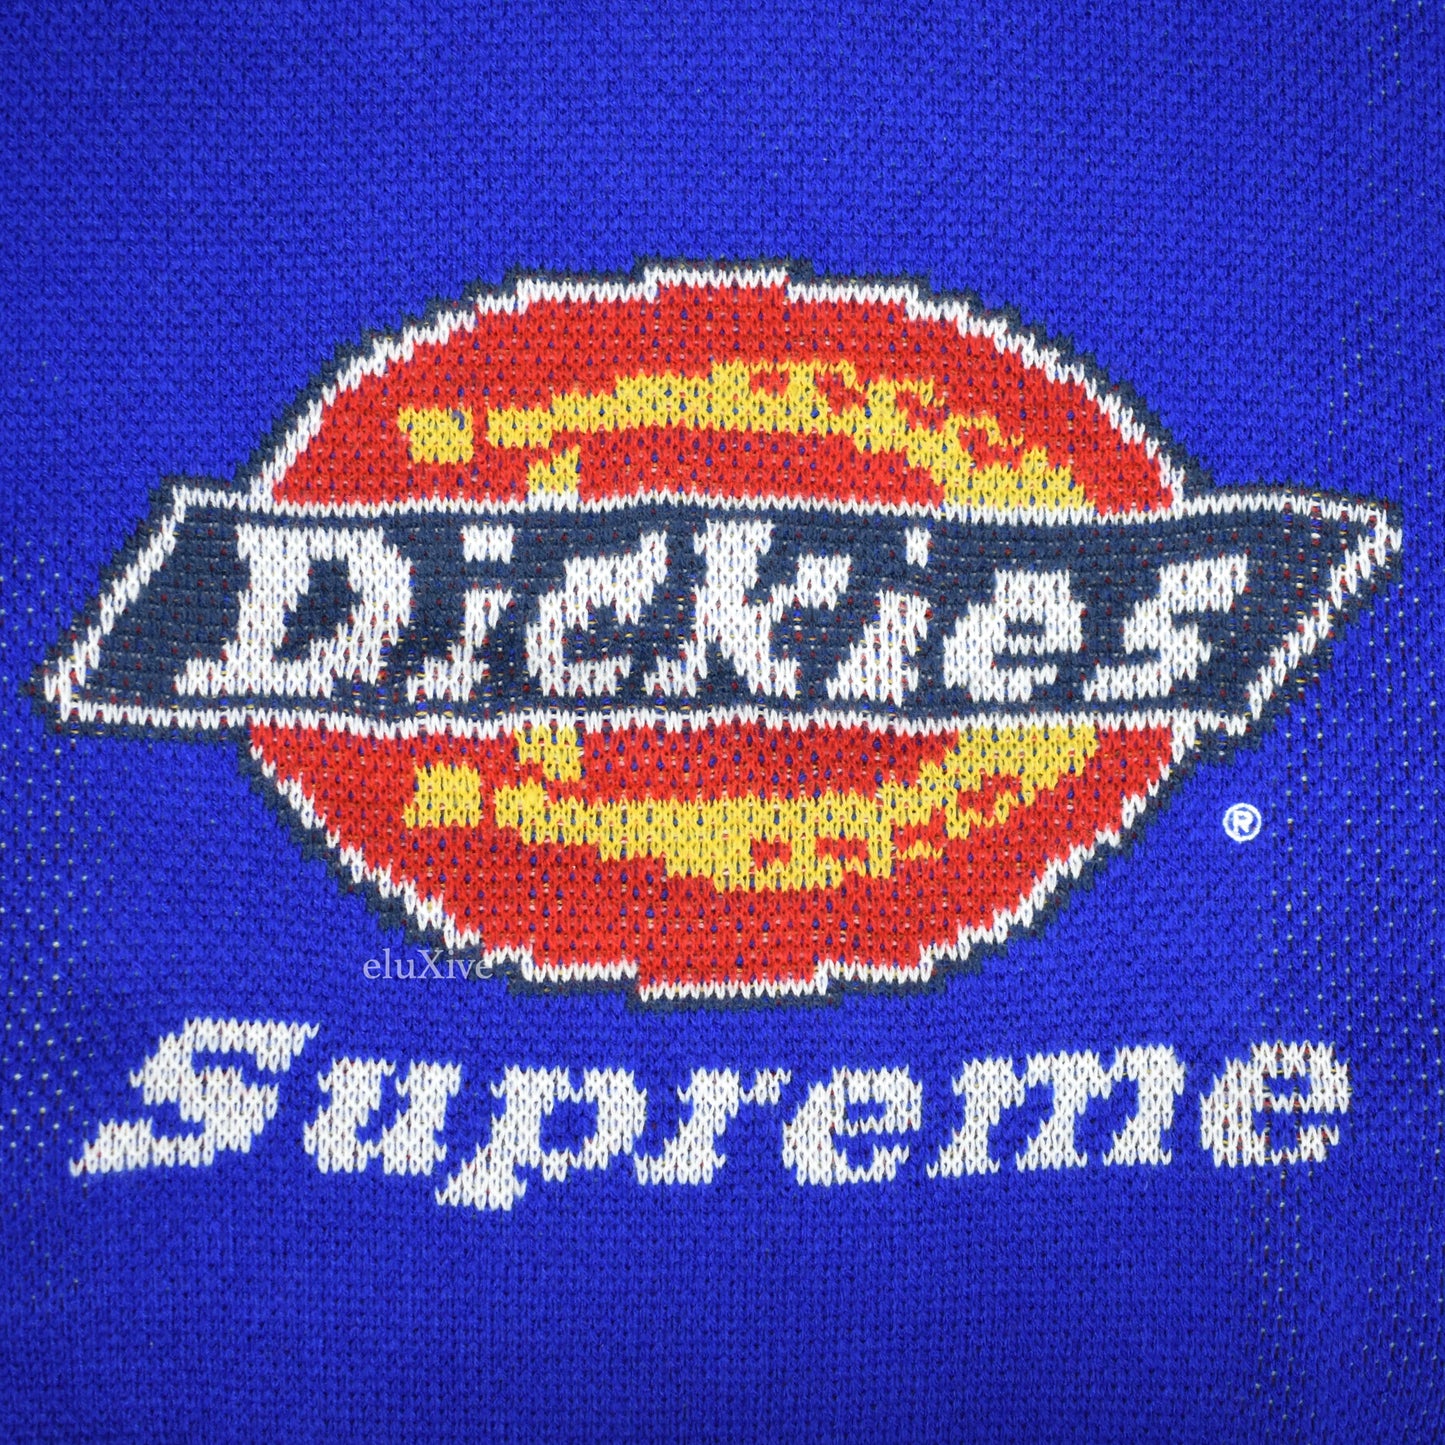 Supreme x Dickies - Royal Blue Jacquard Knit Logo Sweater